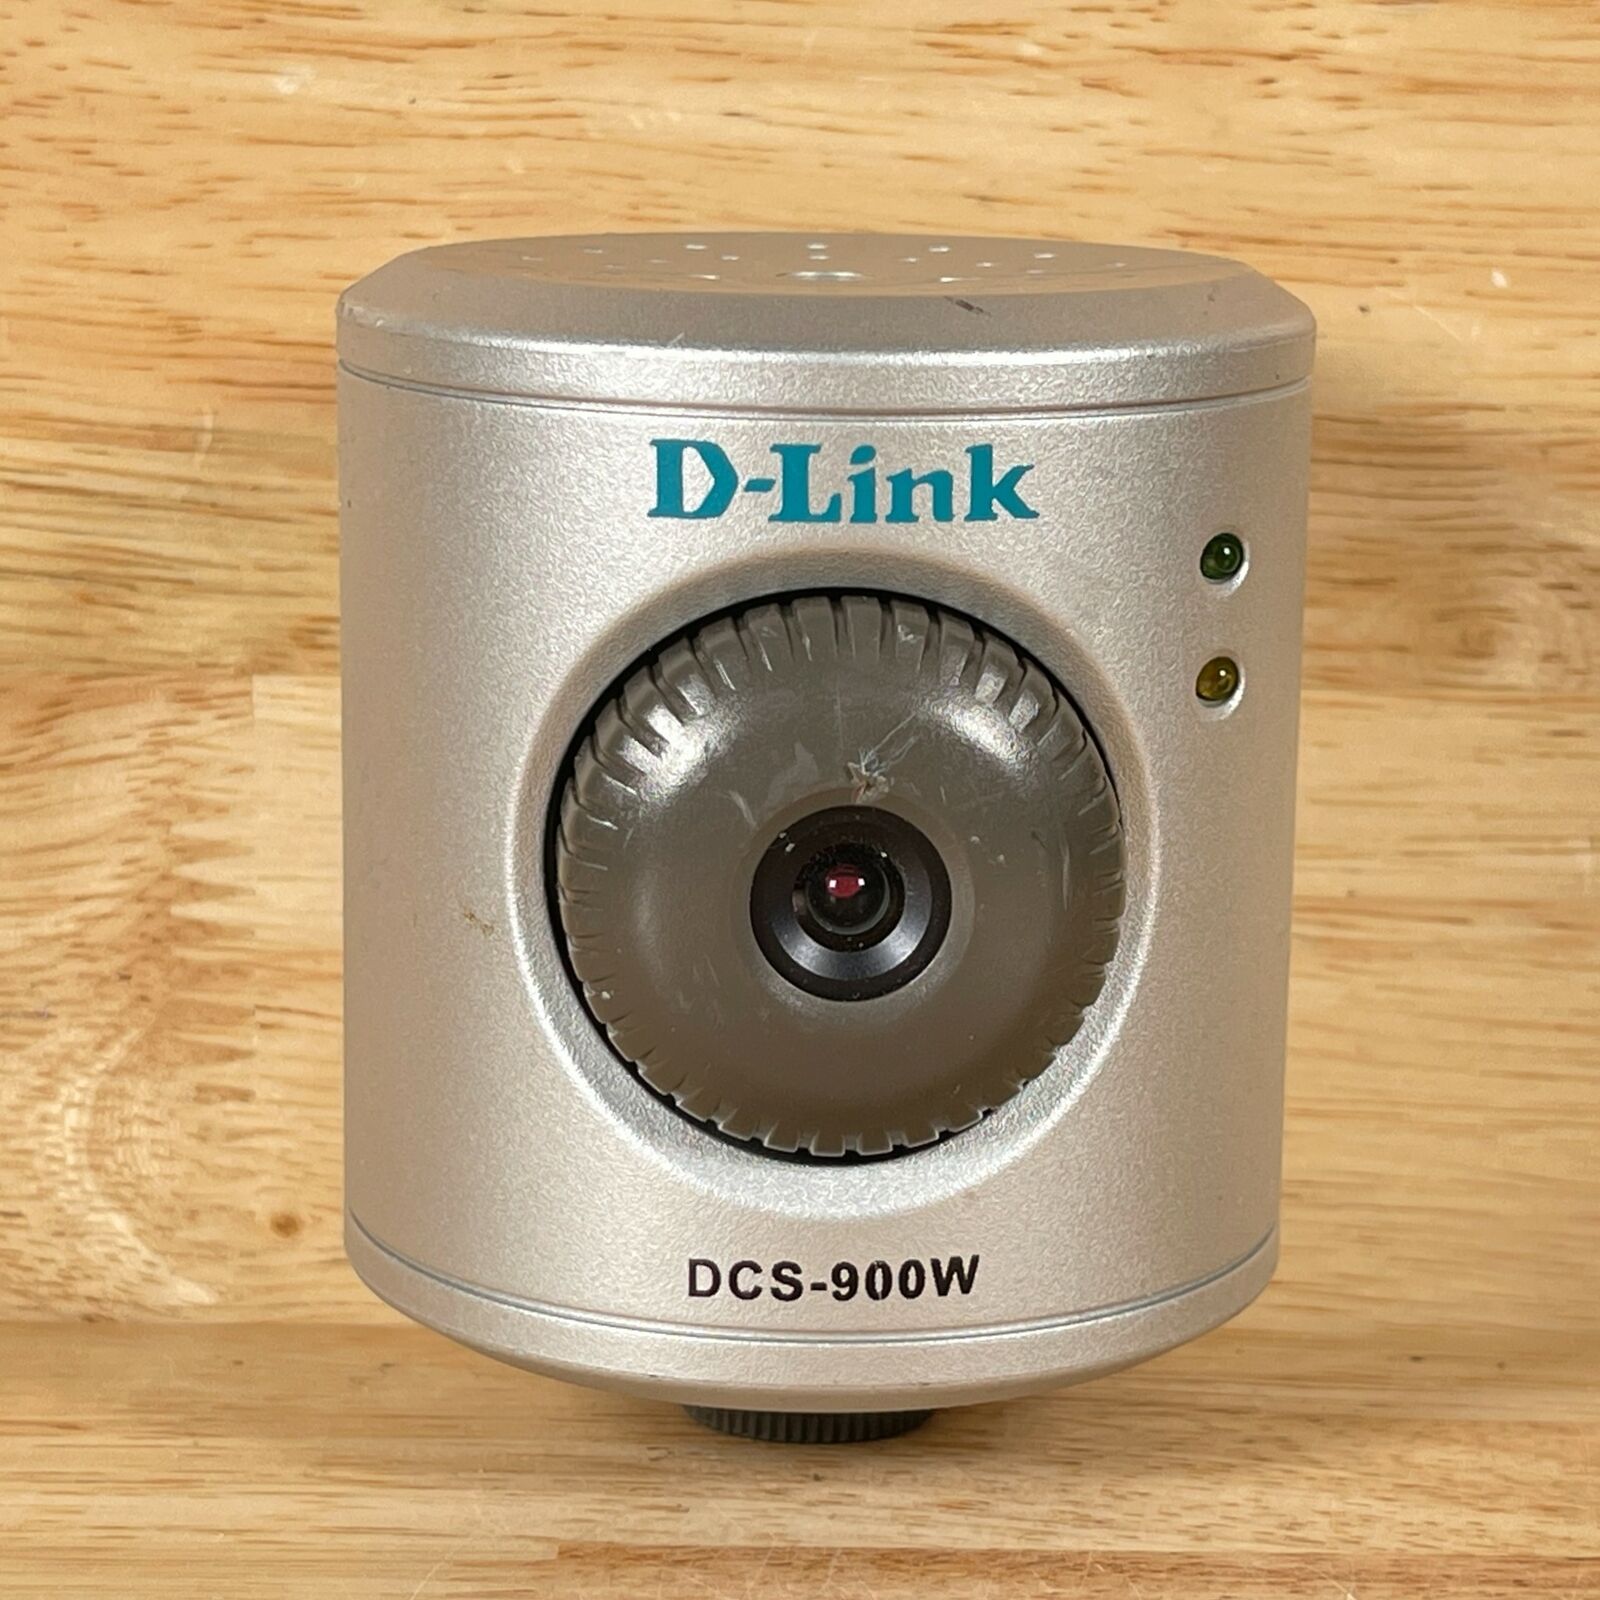 D-Link DCS-900W Silver Wireless Portable One Ethernet Port Internet Camera